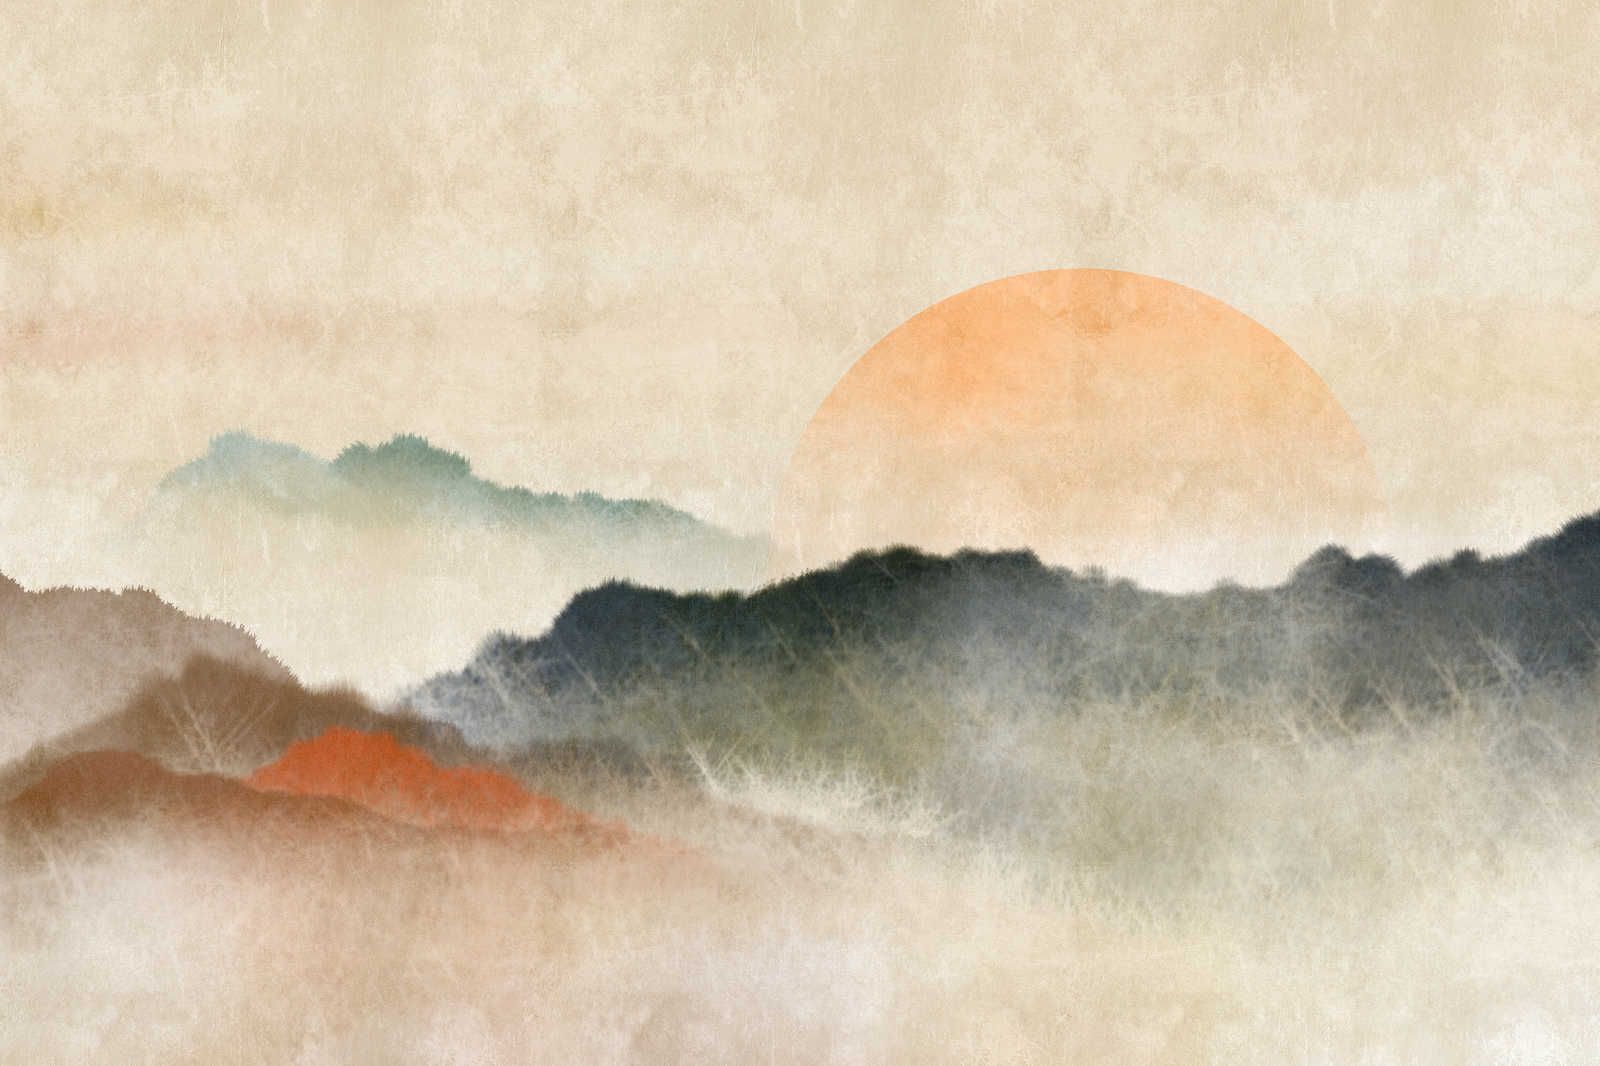             Akaishi 3 - Leinwandbild Sonnenaufgang, Kunstdruck im Asia Style – 1,20 m x 0,80 m
        